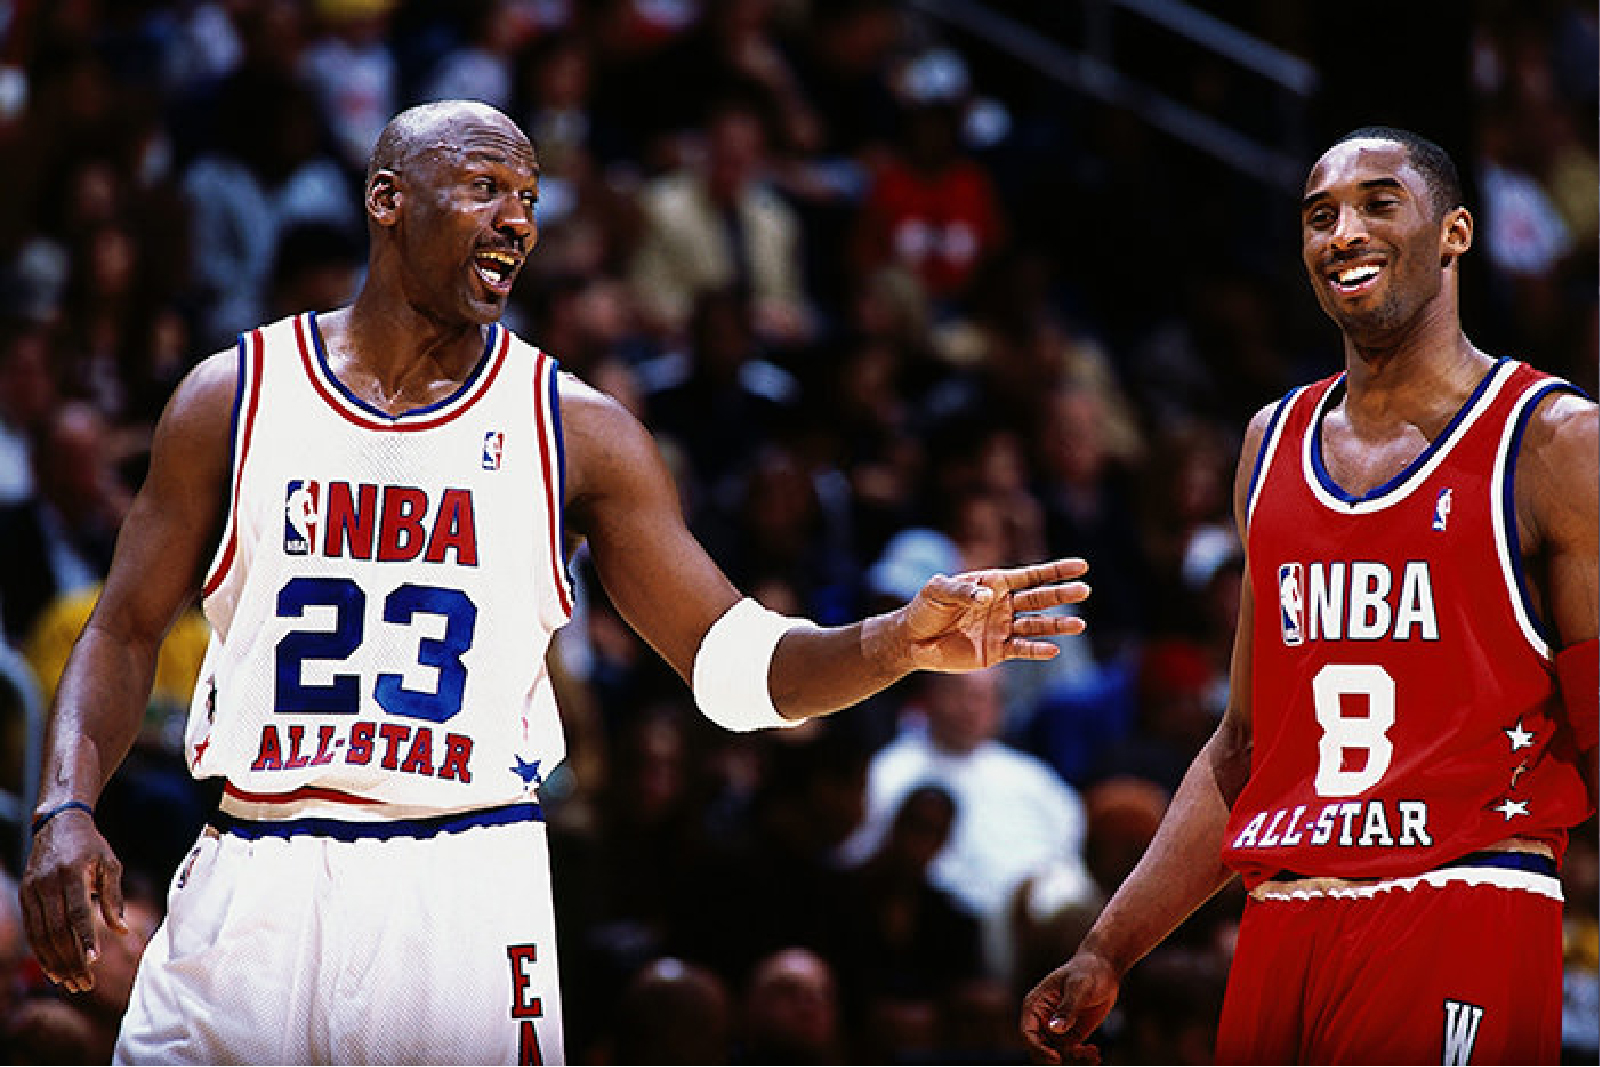 Michael Jordan – The Basketball Legend